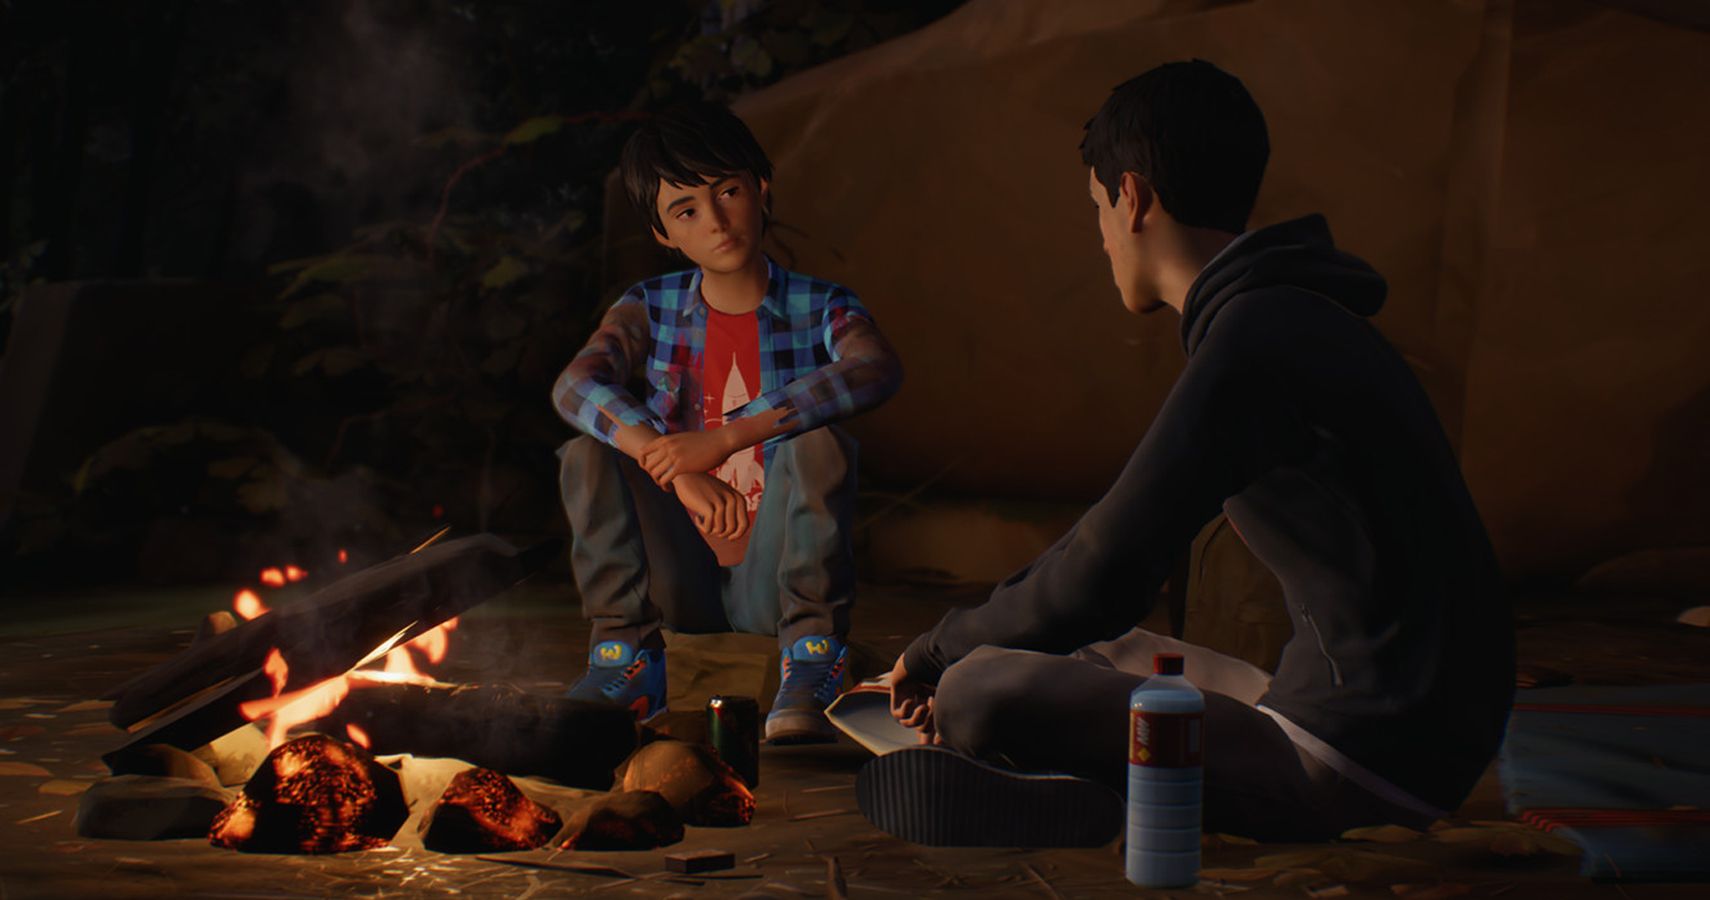 Life Is Strange 2 Screenshot Of Daniel And Sean Talking At Campfire